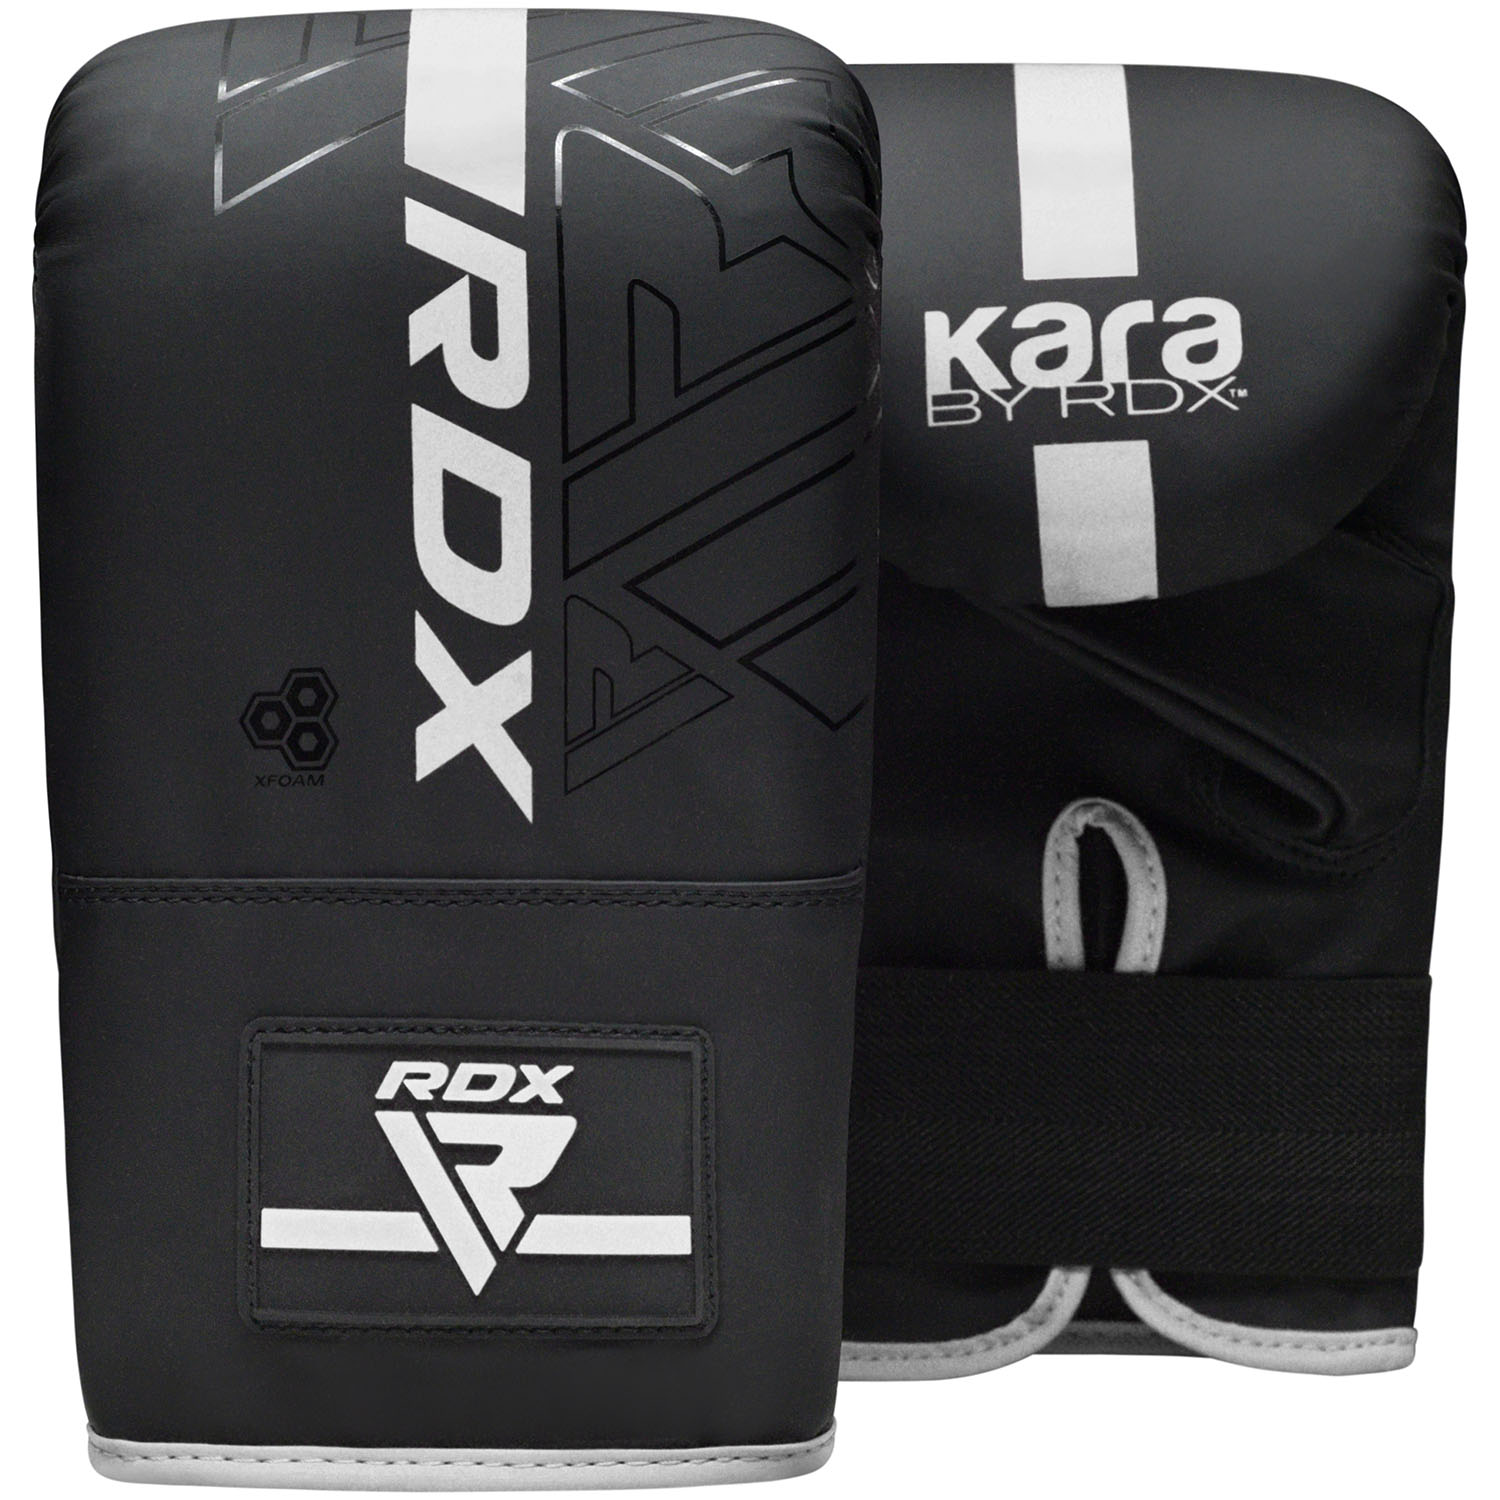 RDX Sand Bag Boxing Gloves, Kara Series F6, black-white